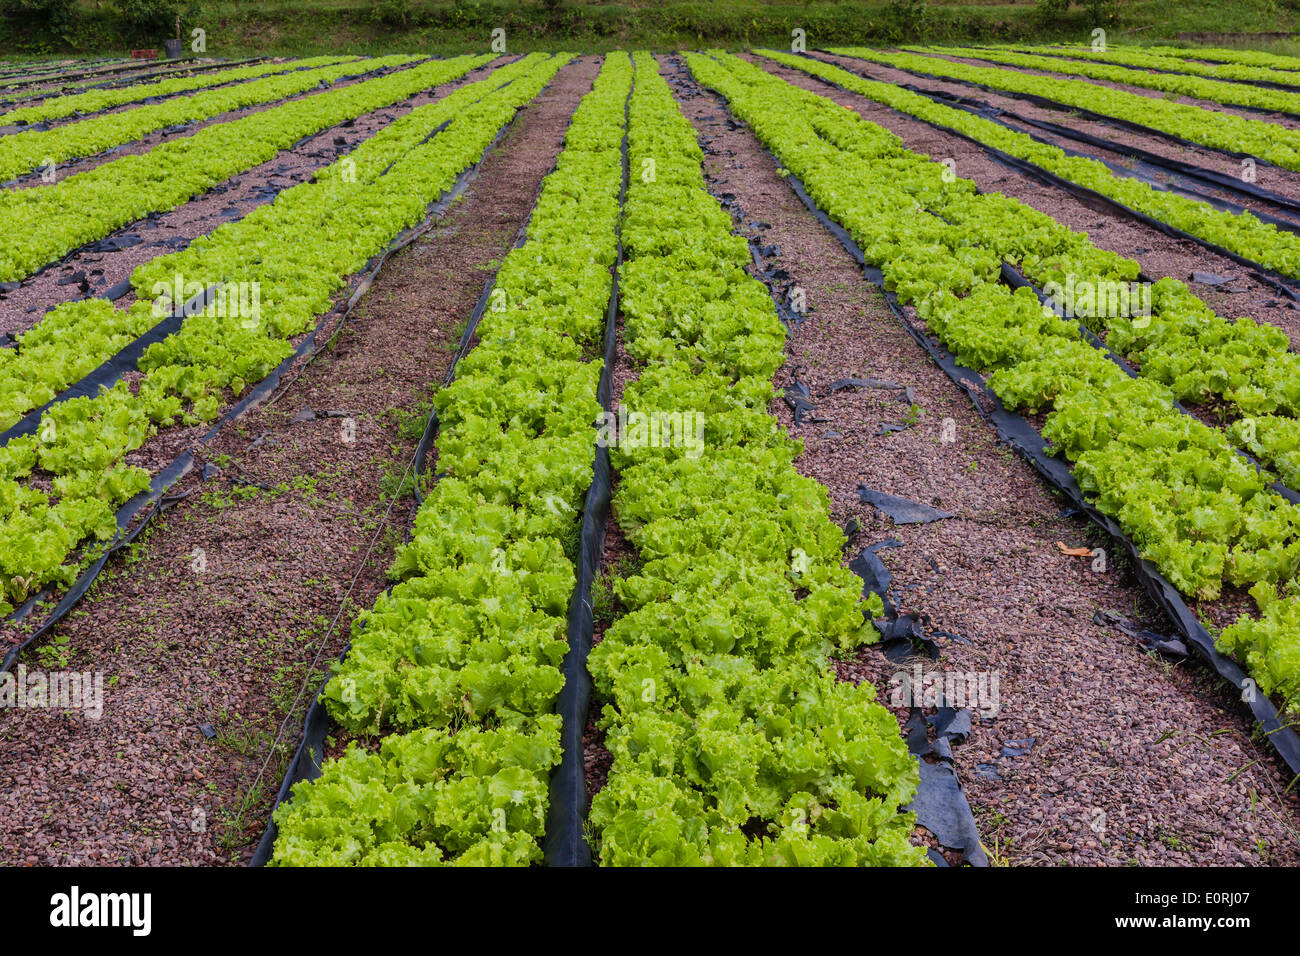 Landwirtschaft Hydrokultur Biolandbau Sämlinge Gemüse und Kräuter für Lebensmittelmärkte Stockfoto